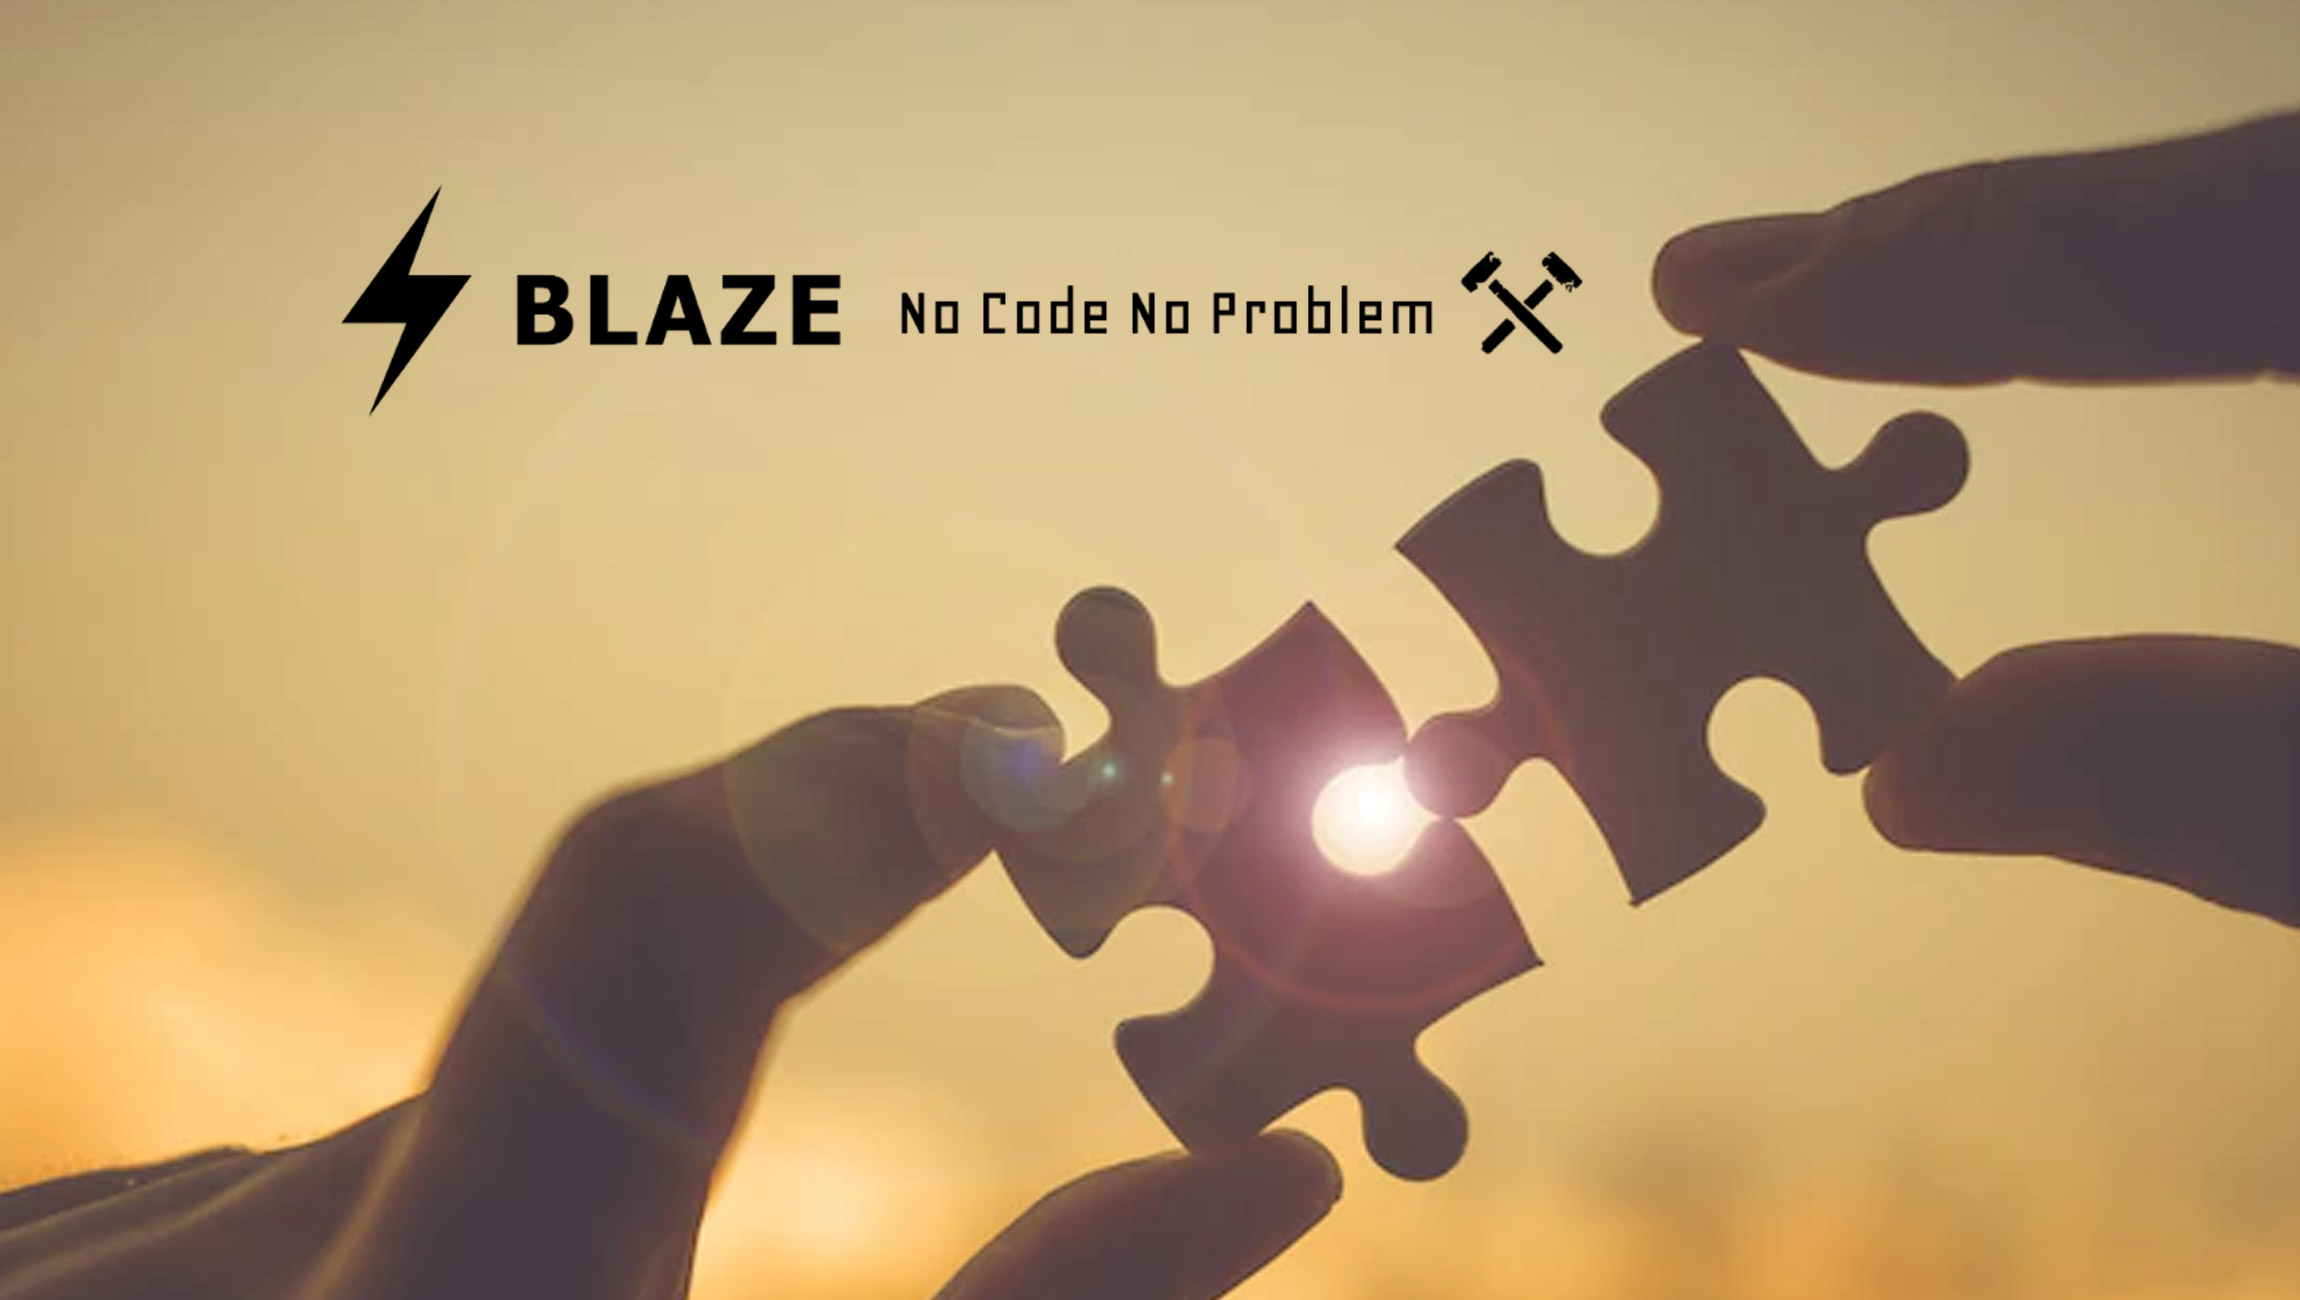 Blaze Acquires Popular No-Code Learning Platform No Code No Problem 1